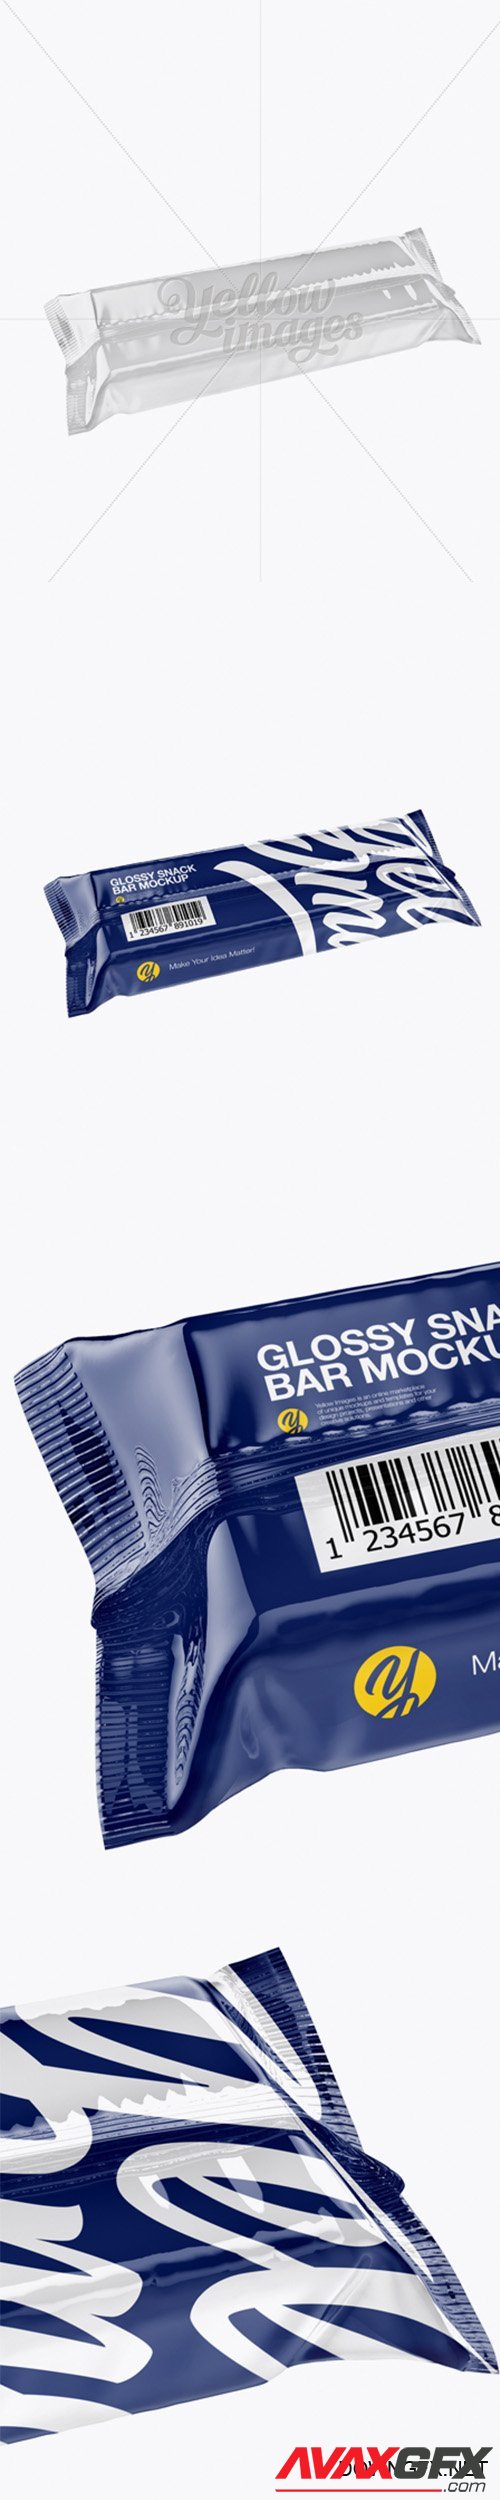 Glossy Snack Bar Mockup - Back Half Side View (High-Angle Shot) 18966 TIF